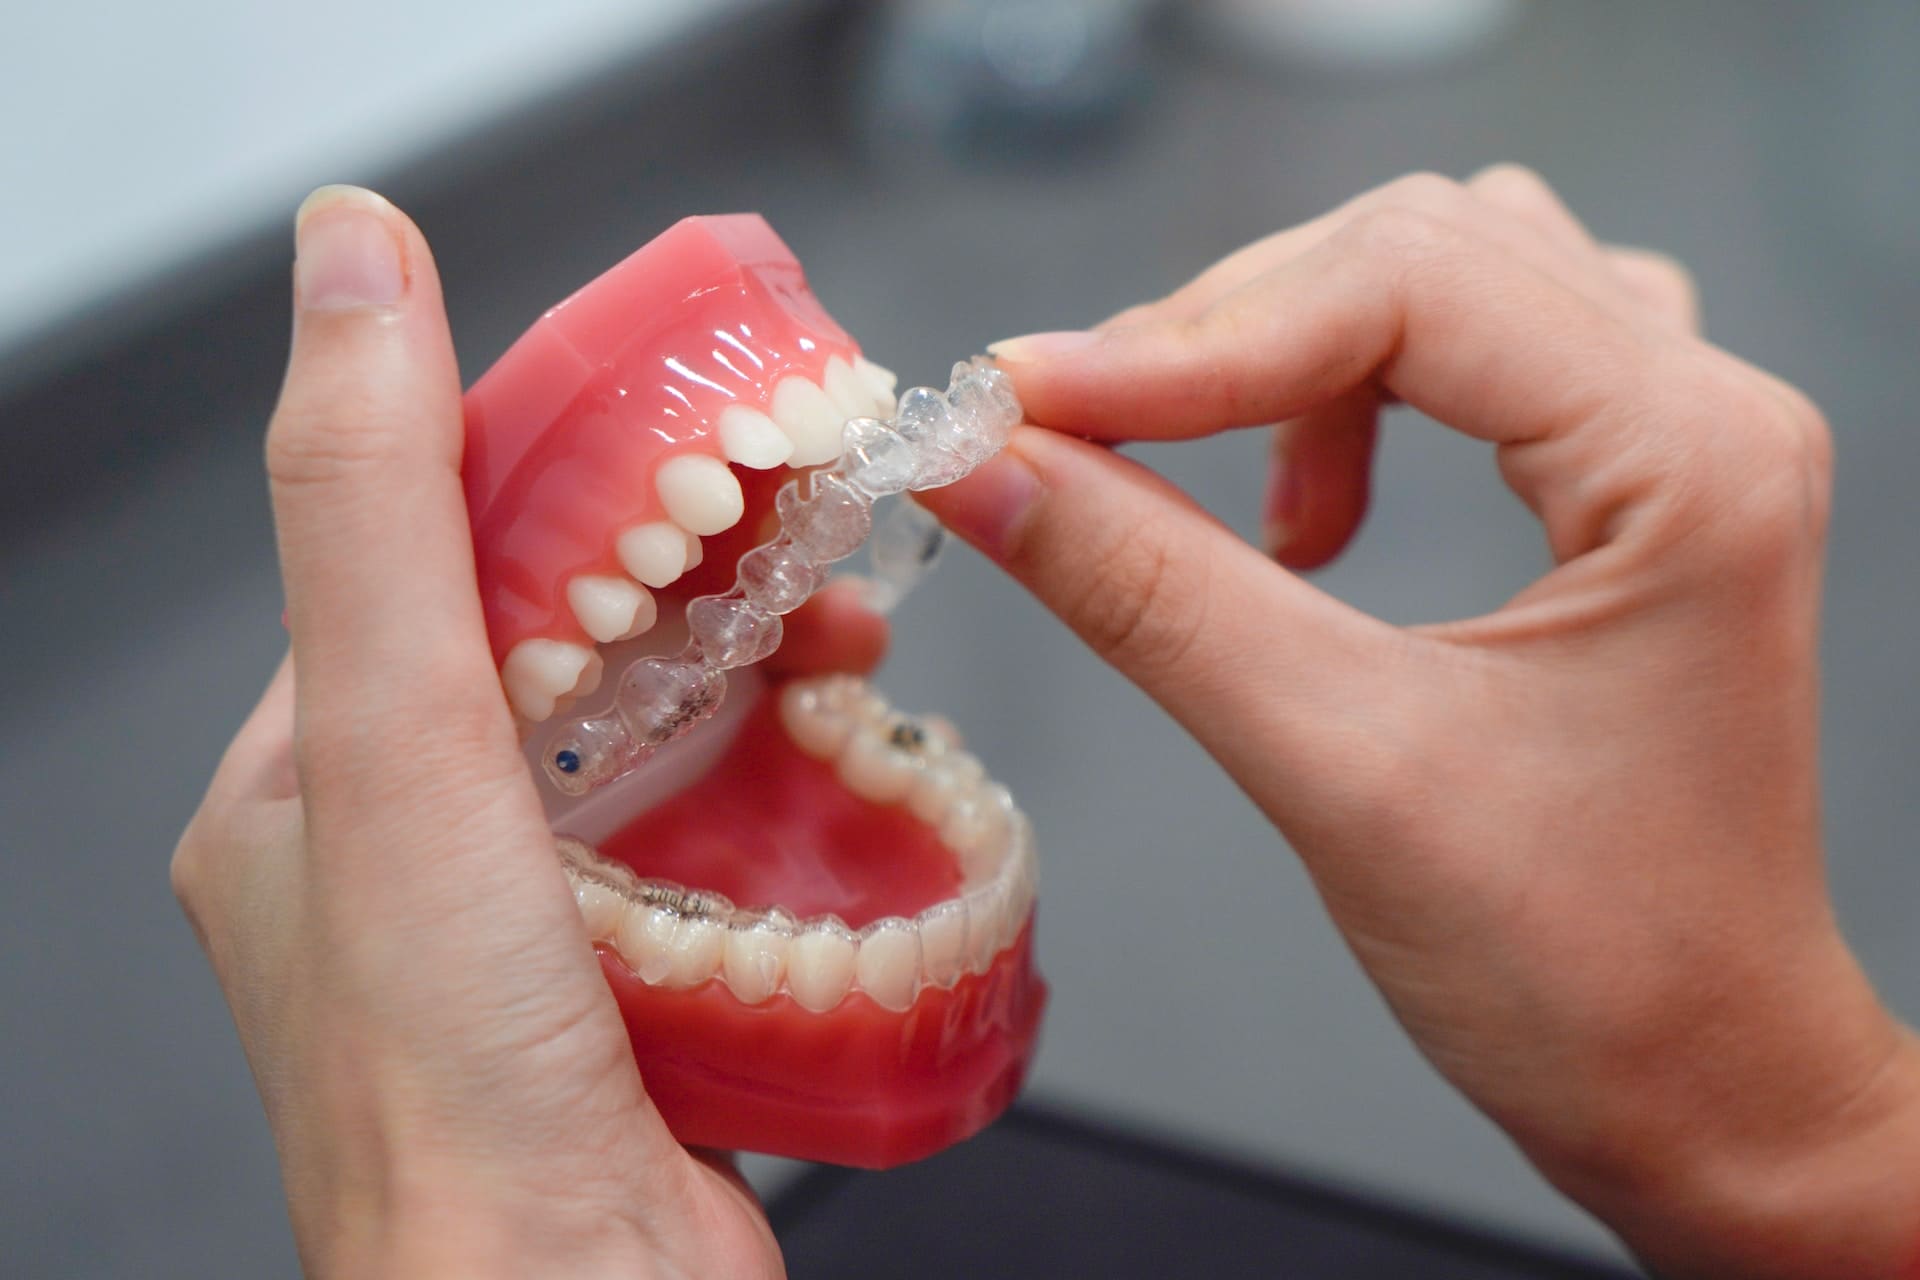 Braces vs. Invisalign: Which Wins in Orthodontic Treatment?